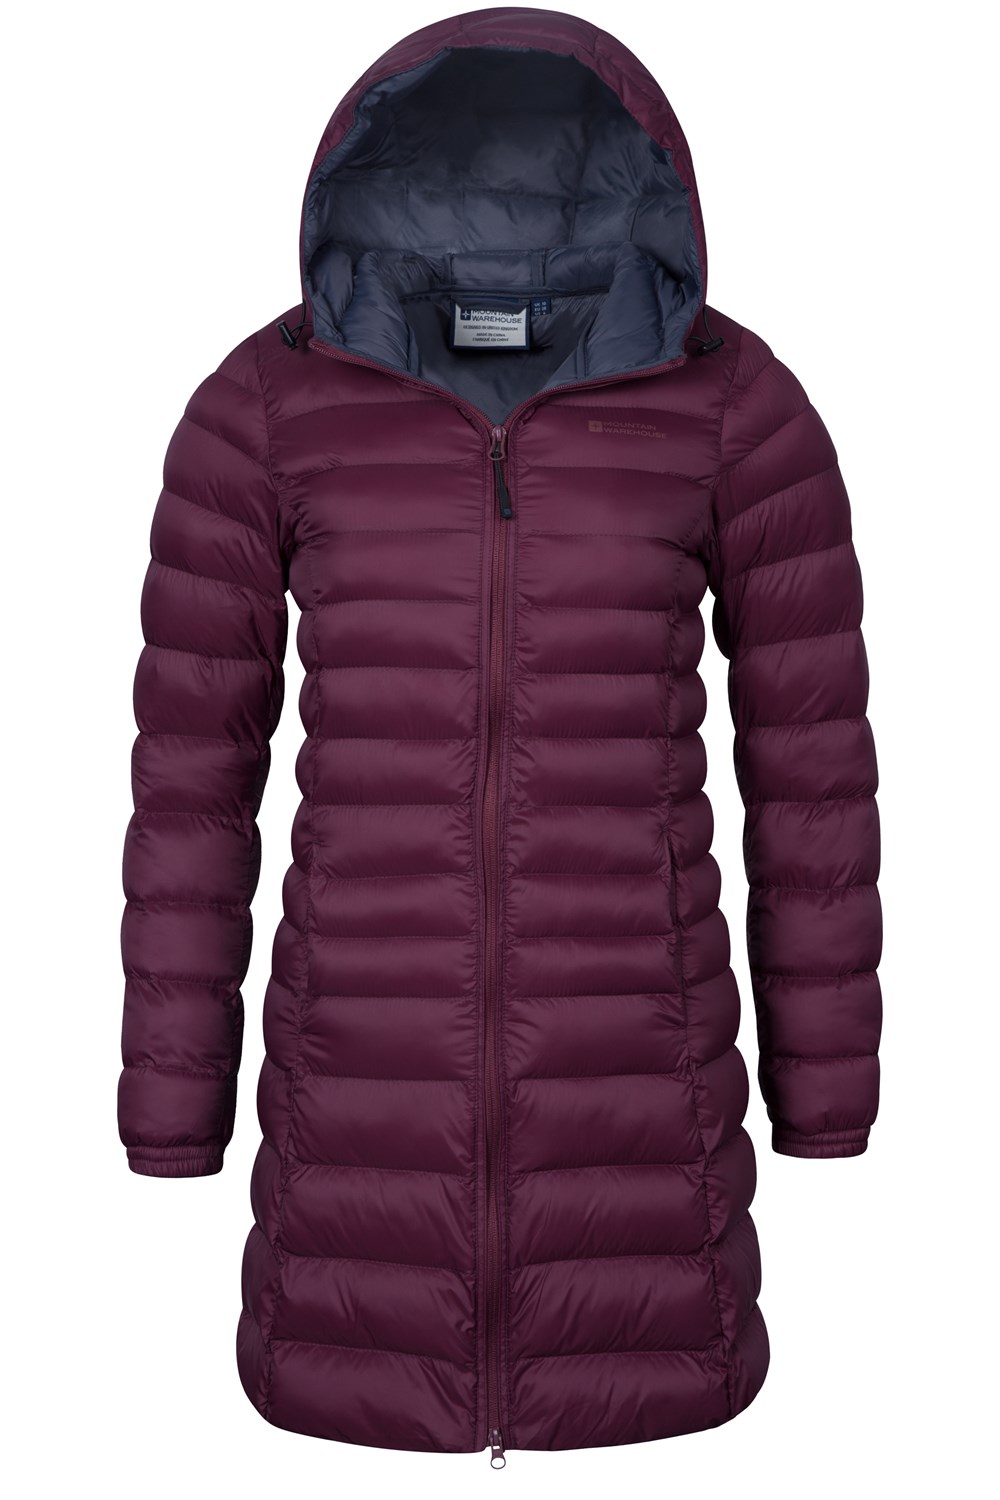 Mountain Warehouse Florence Womens Long Padded Jacket | eBay